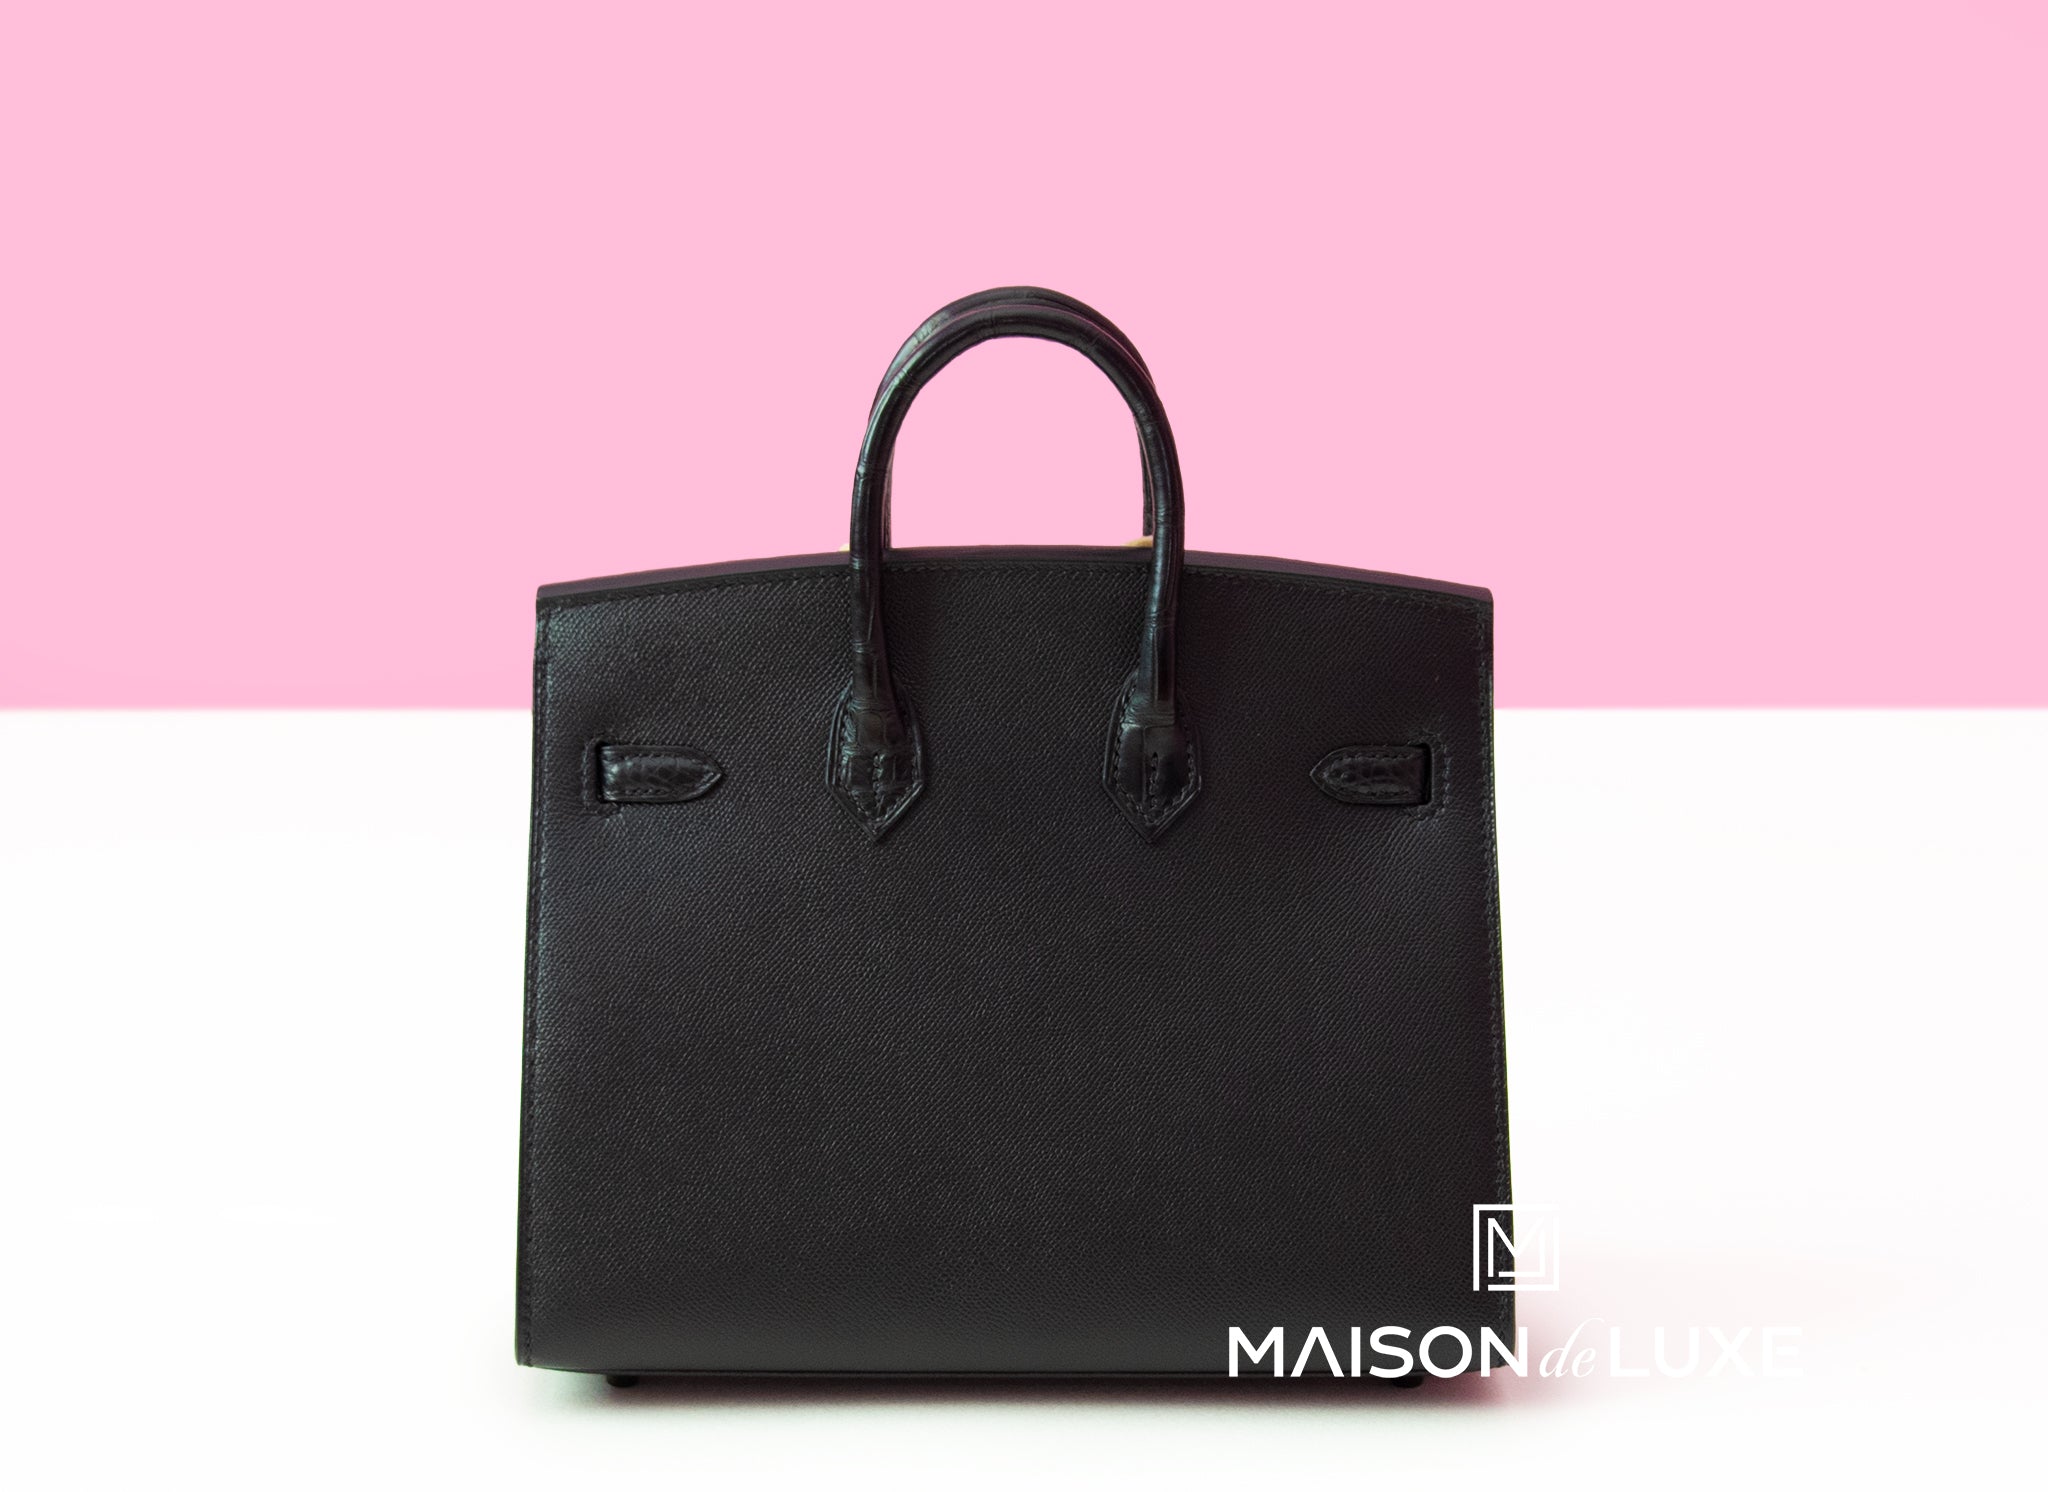 BERKIN Designer Black Leather Tote Bag Luxury Handbag For Women